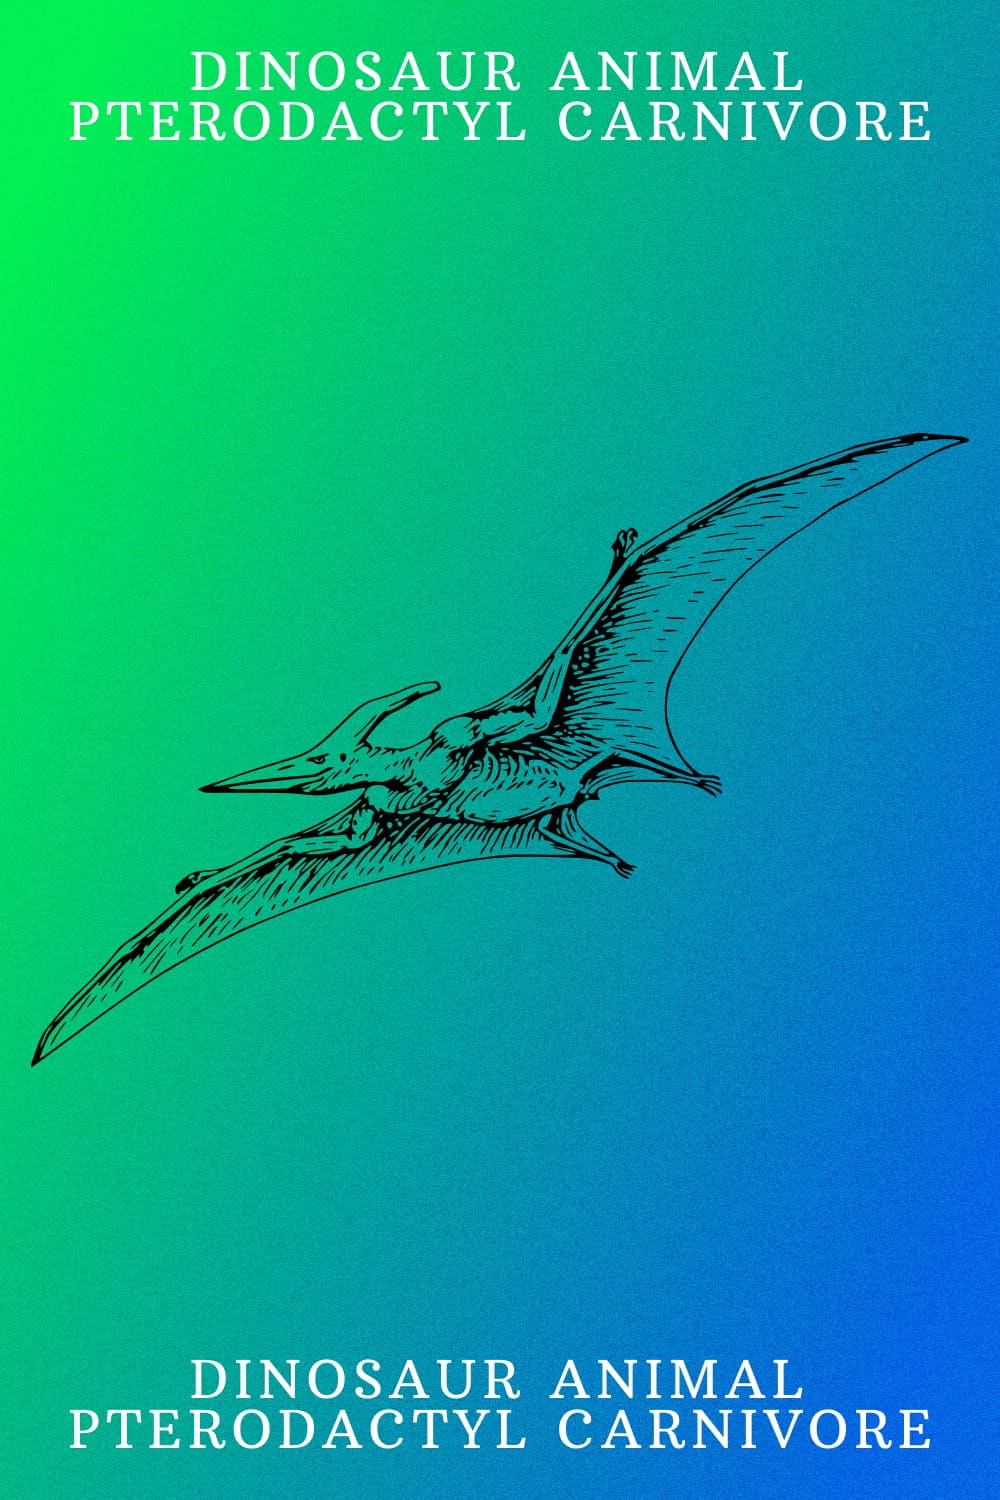 Dinosaur Animal Pterodactyl Carnivore - Pinterest Image.